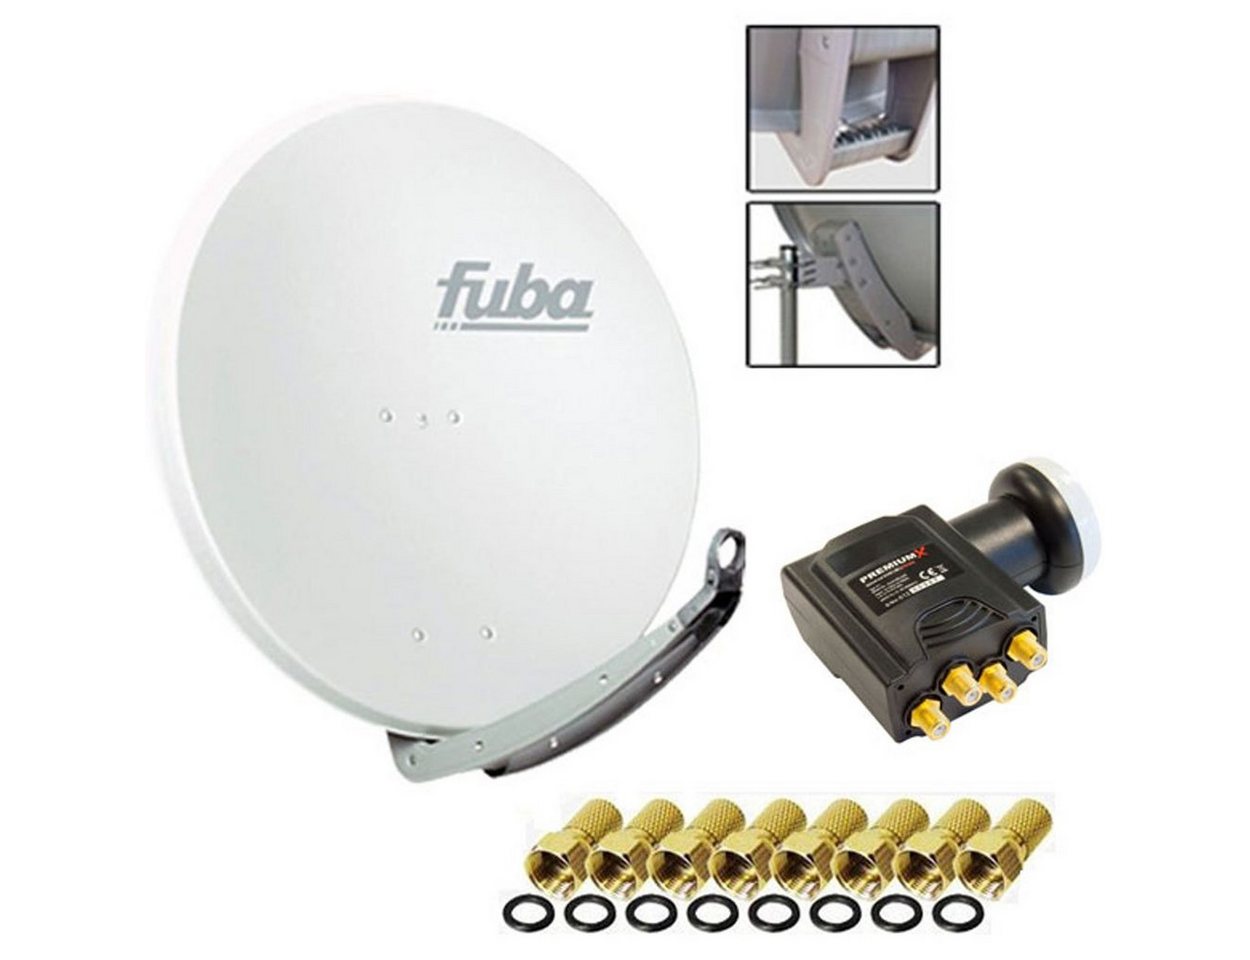 fuba Fuba DAA 850 Digital Sat Schüssel Weiß 85x85cm Deluxe LNB Quad SAT-Antenne von fuba